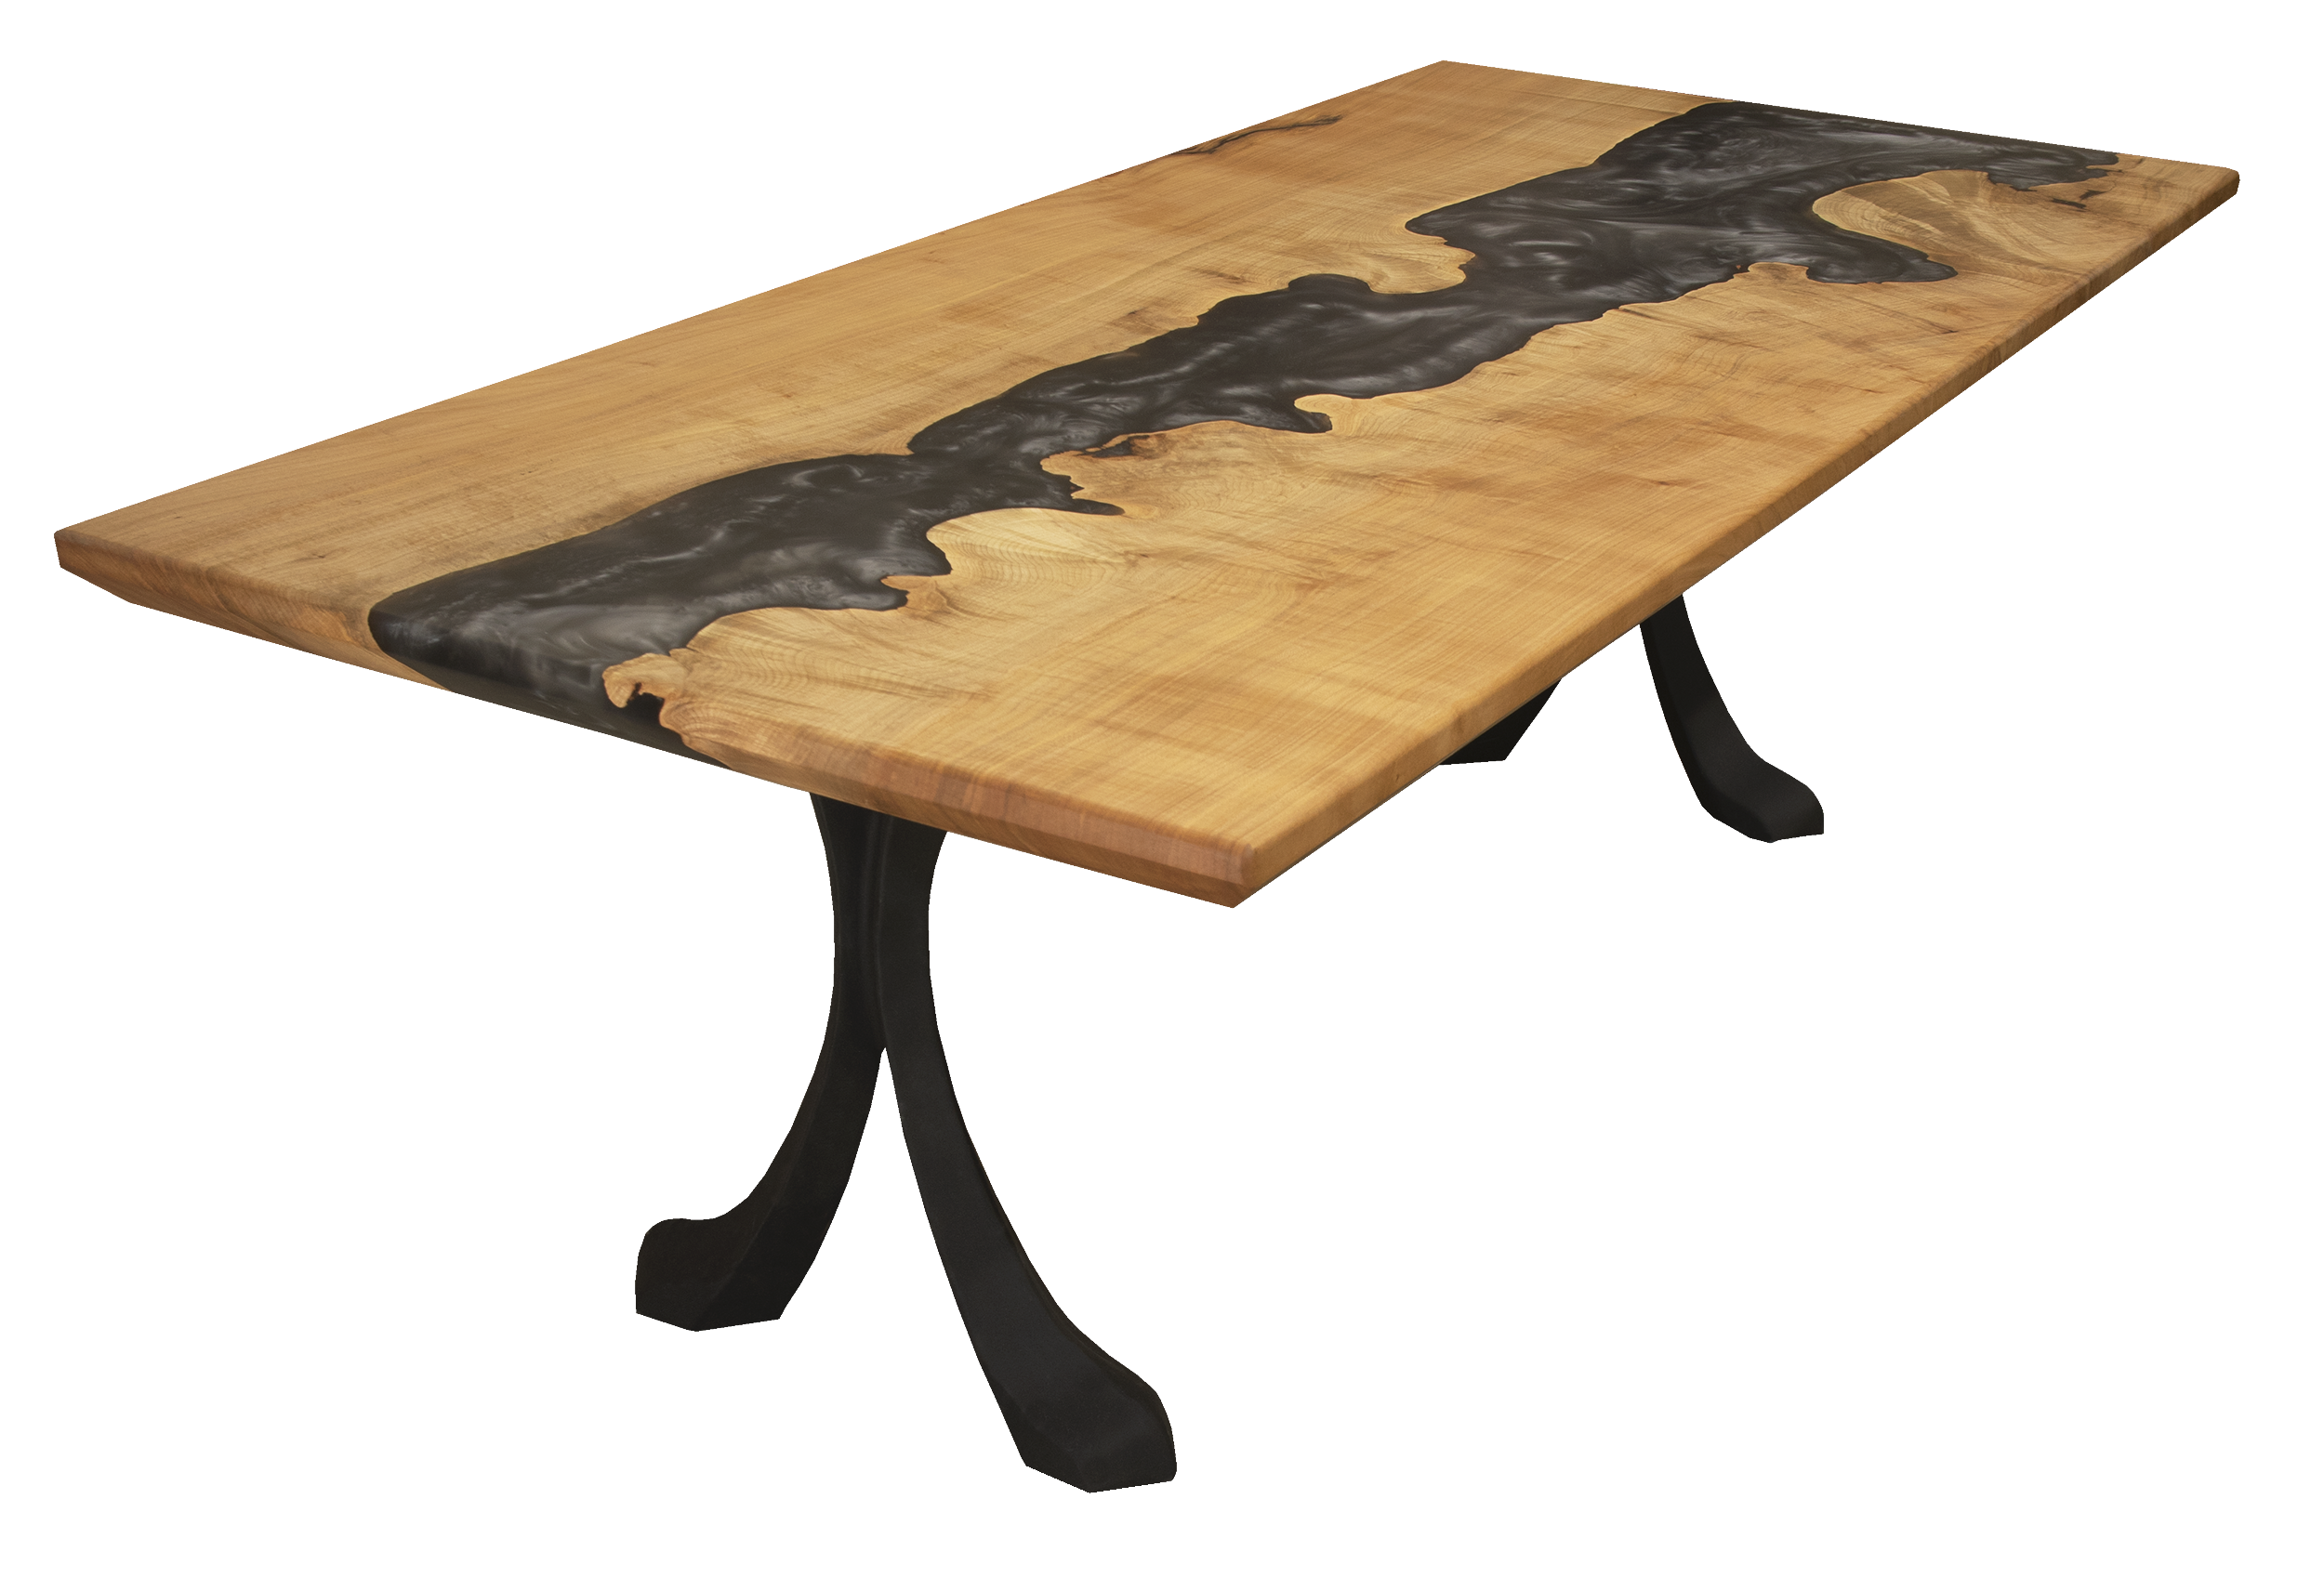 Epoxy Countertop, Epoxy Kitchen Table, Diy Wooden Table, Blue